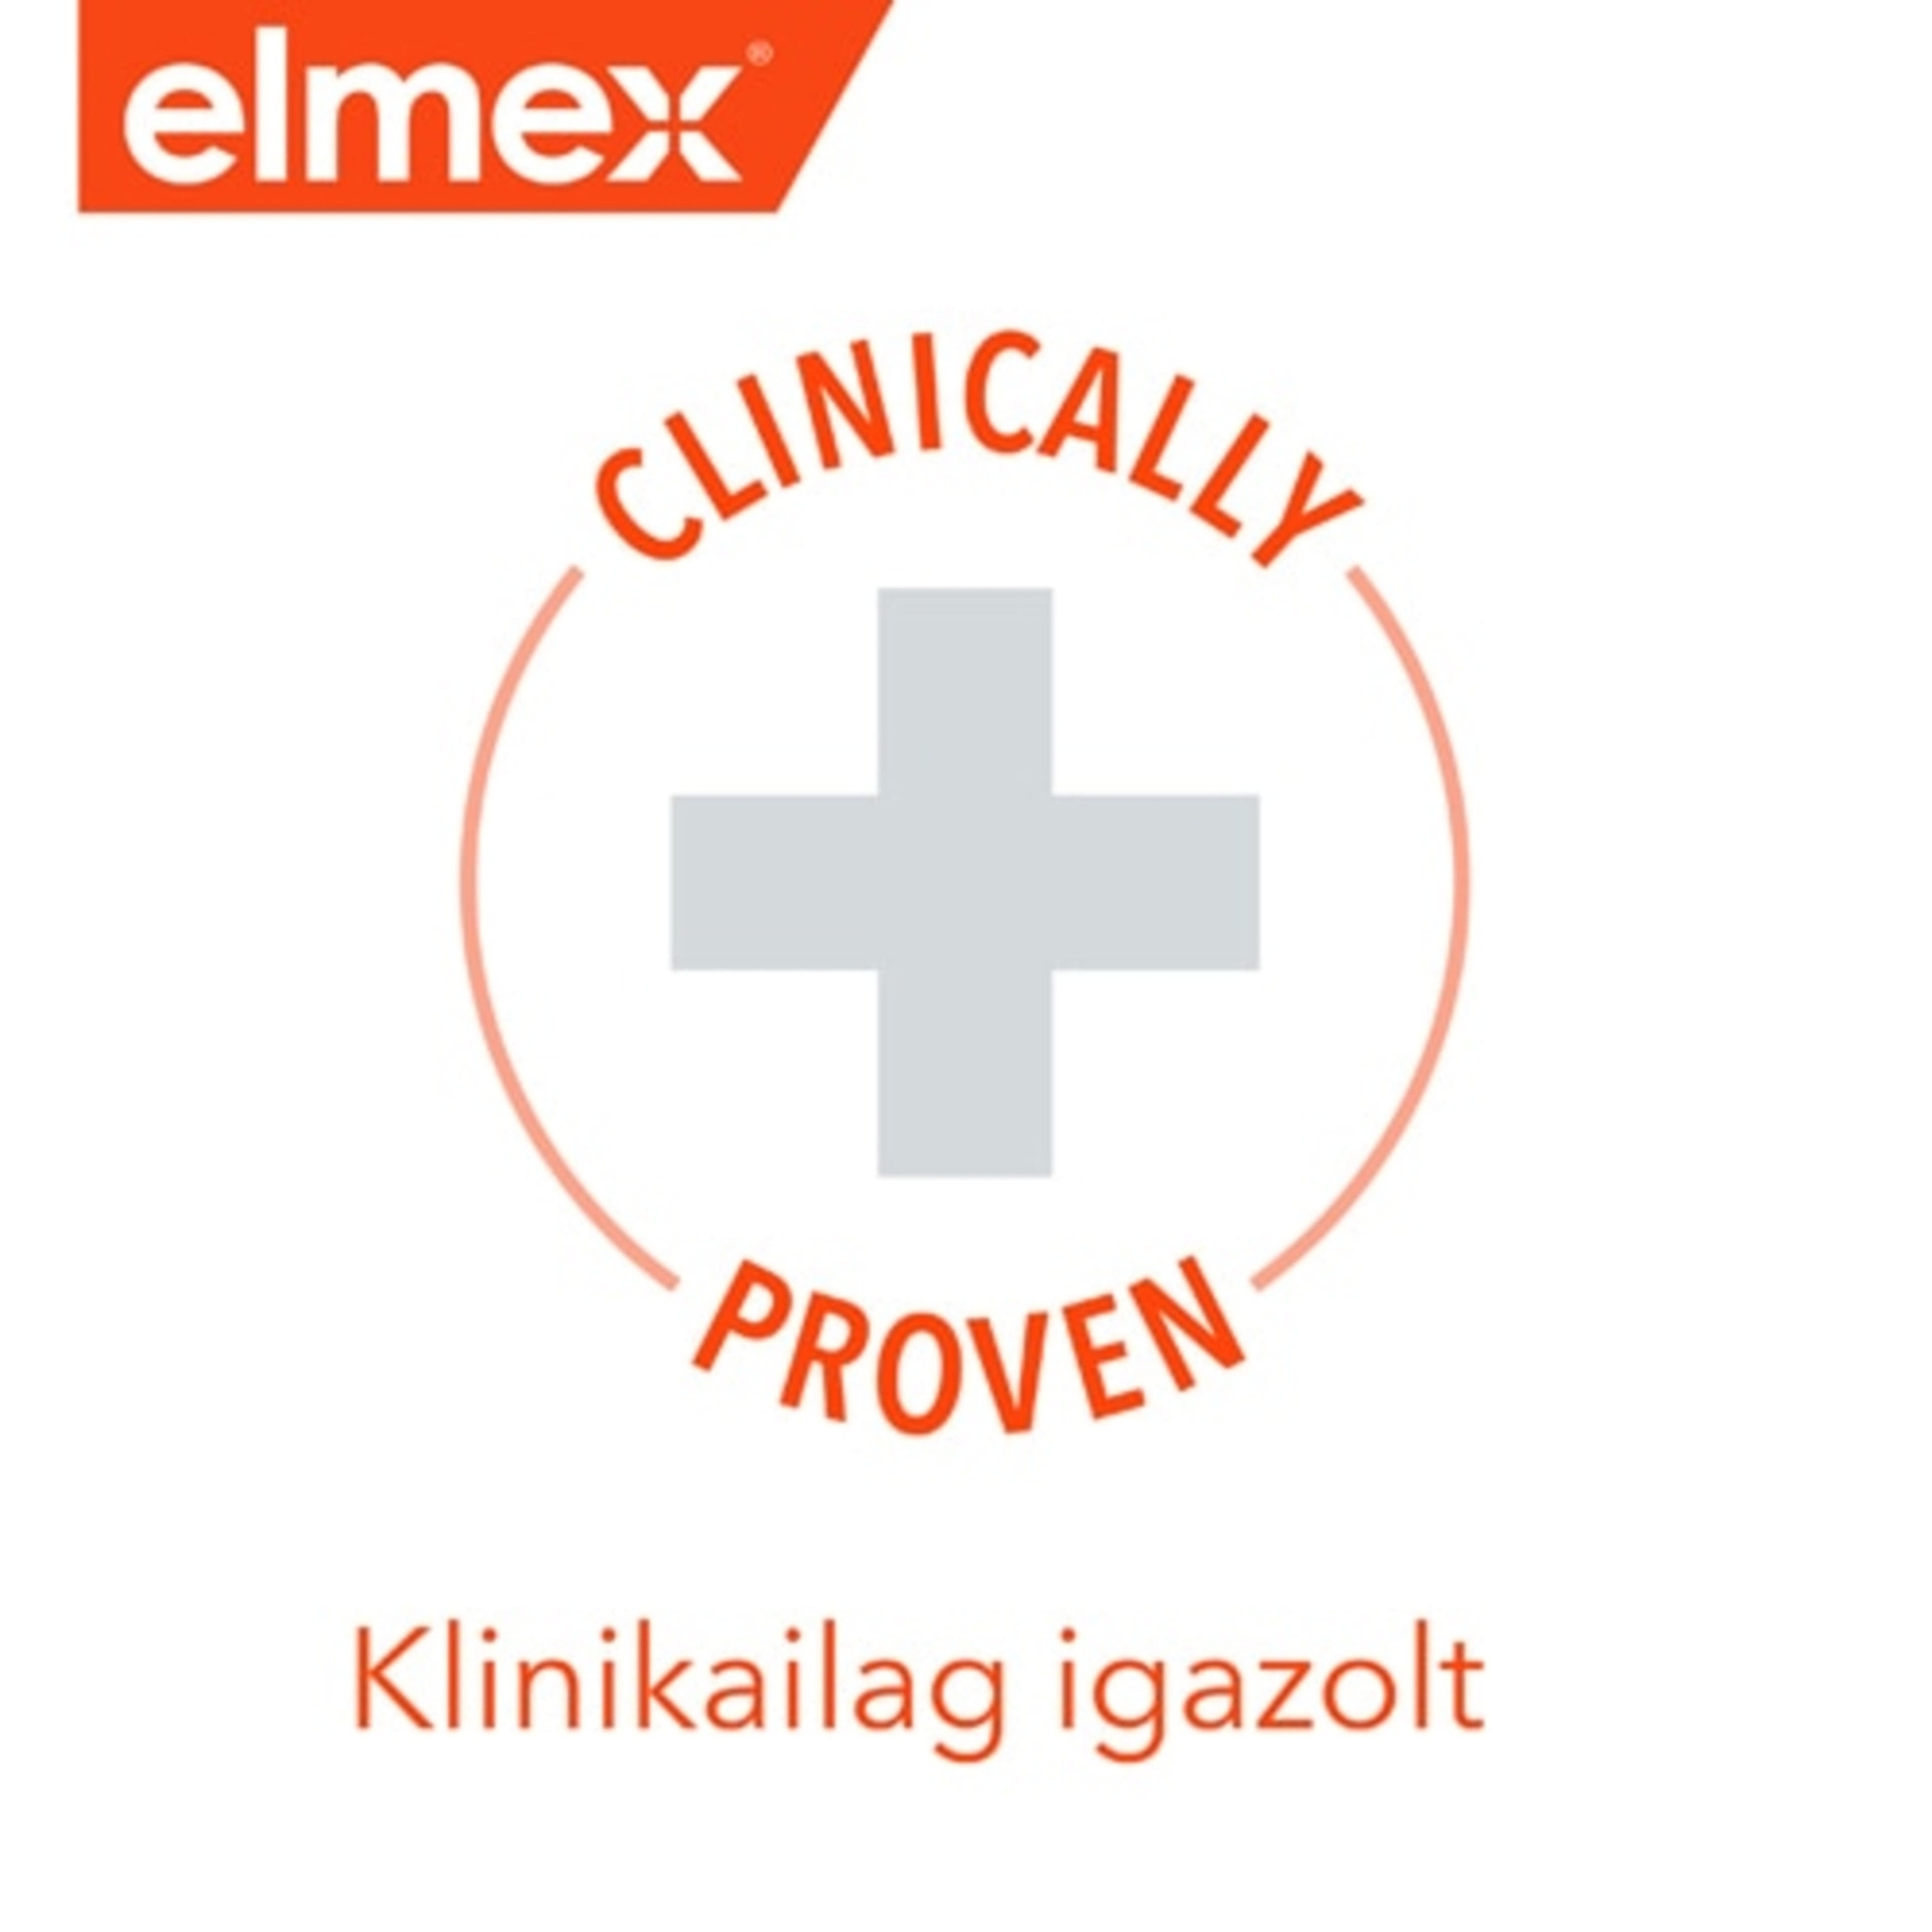 Elmex Anti-Caries Protection Professional fogkrém fogkrém - 75 ml-8